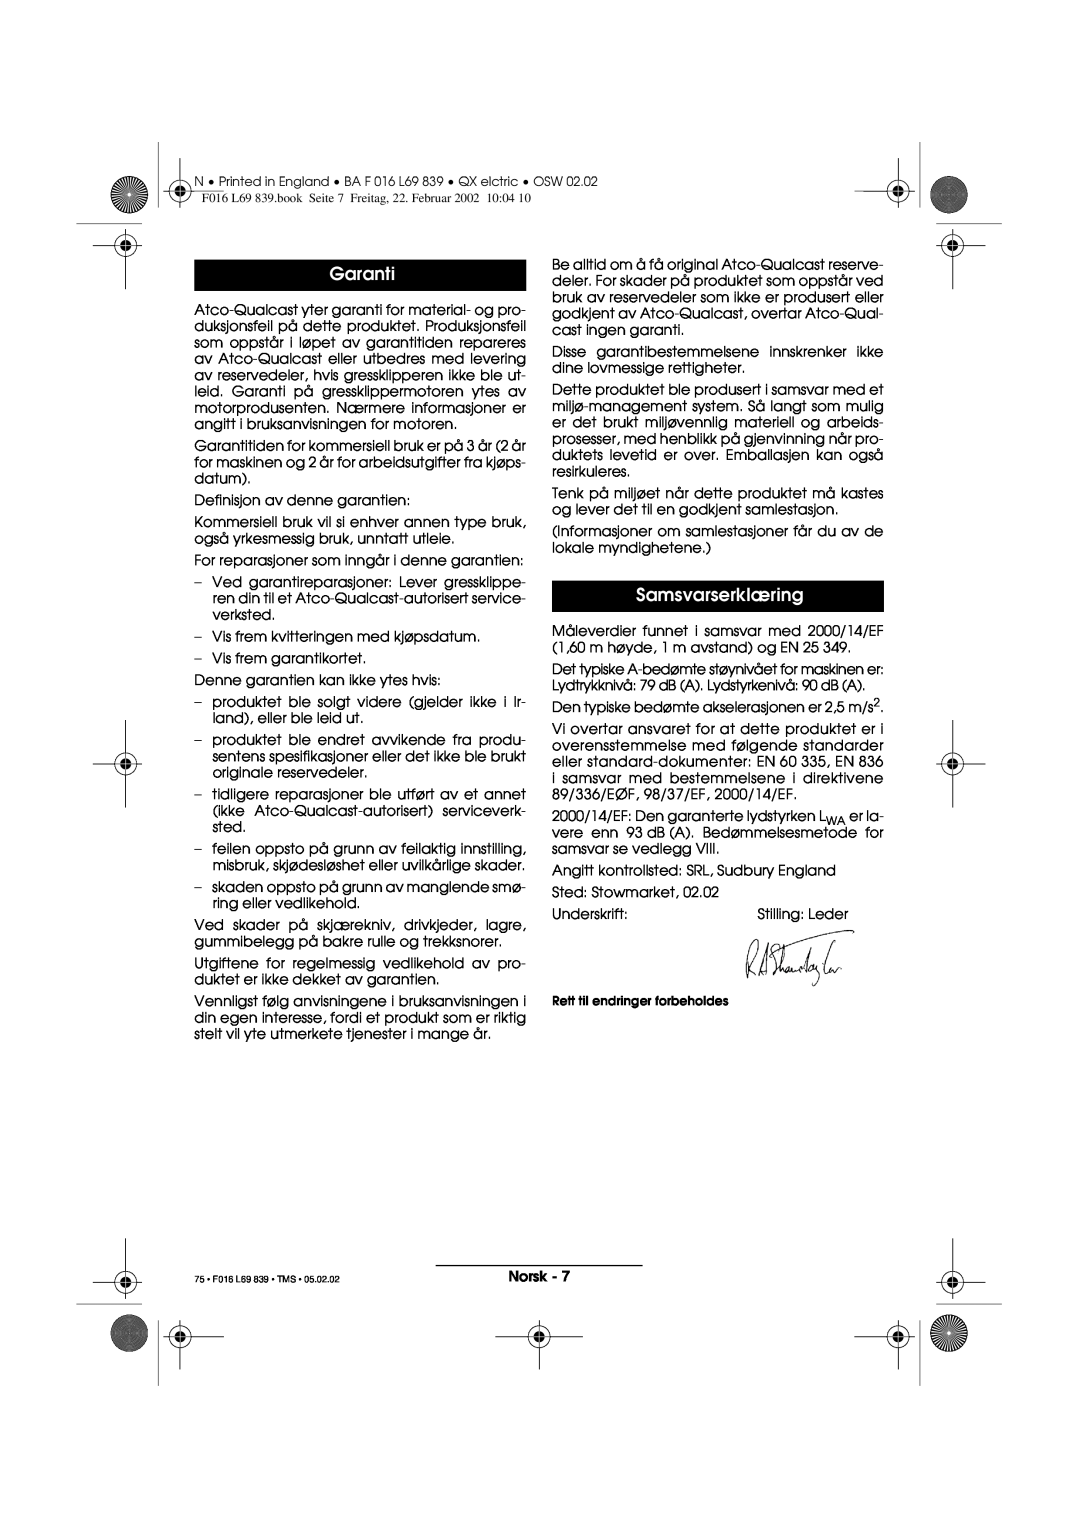 Atco QX operating instructions Garanti, Samsvarserklæring, 75 F016 L69 839 TMS 